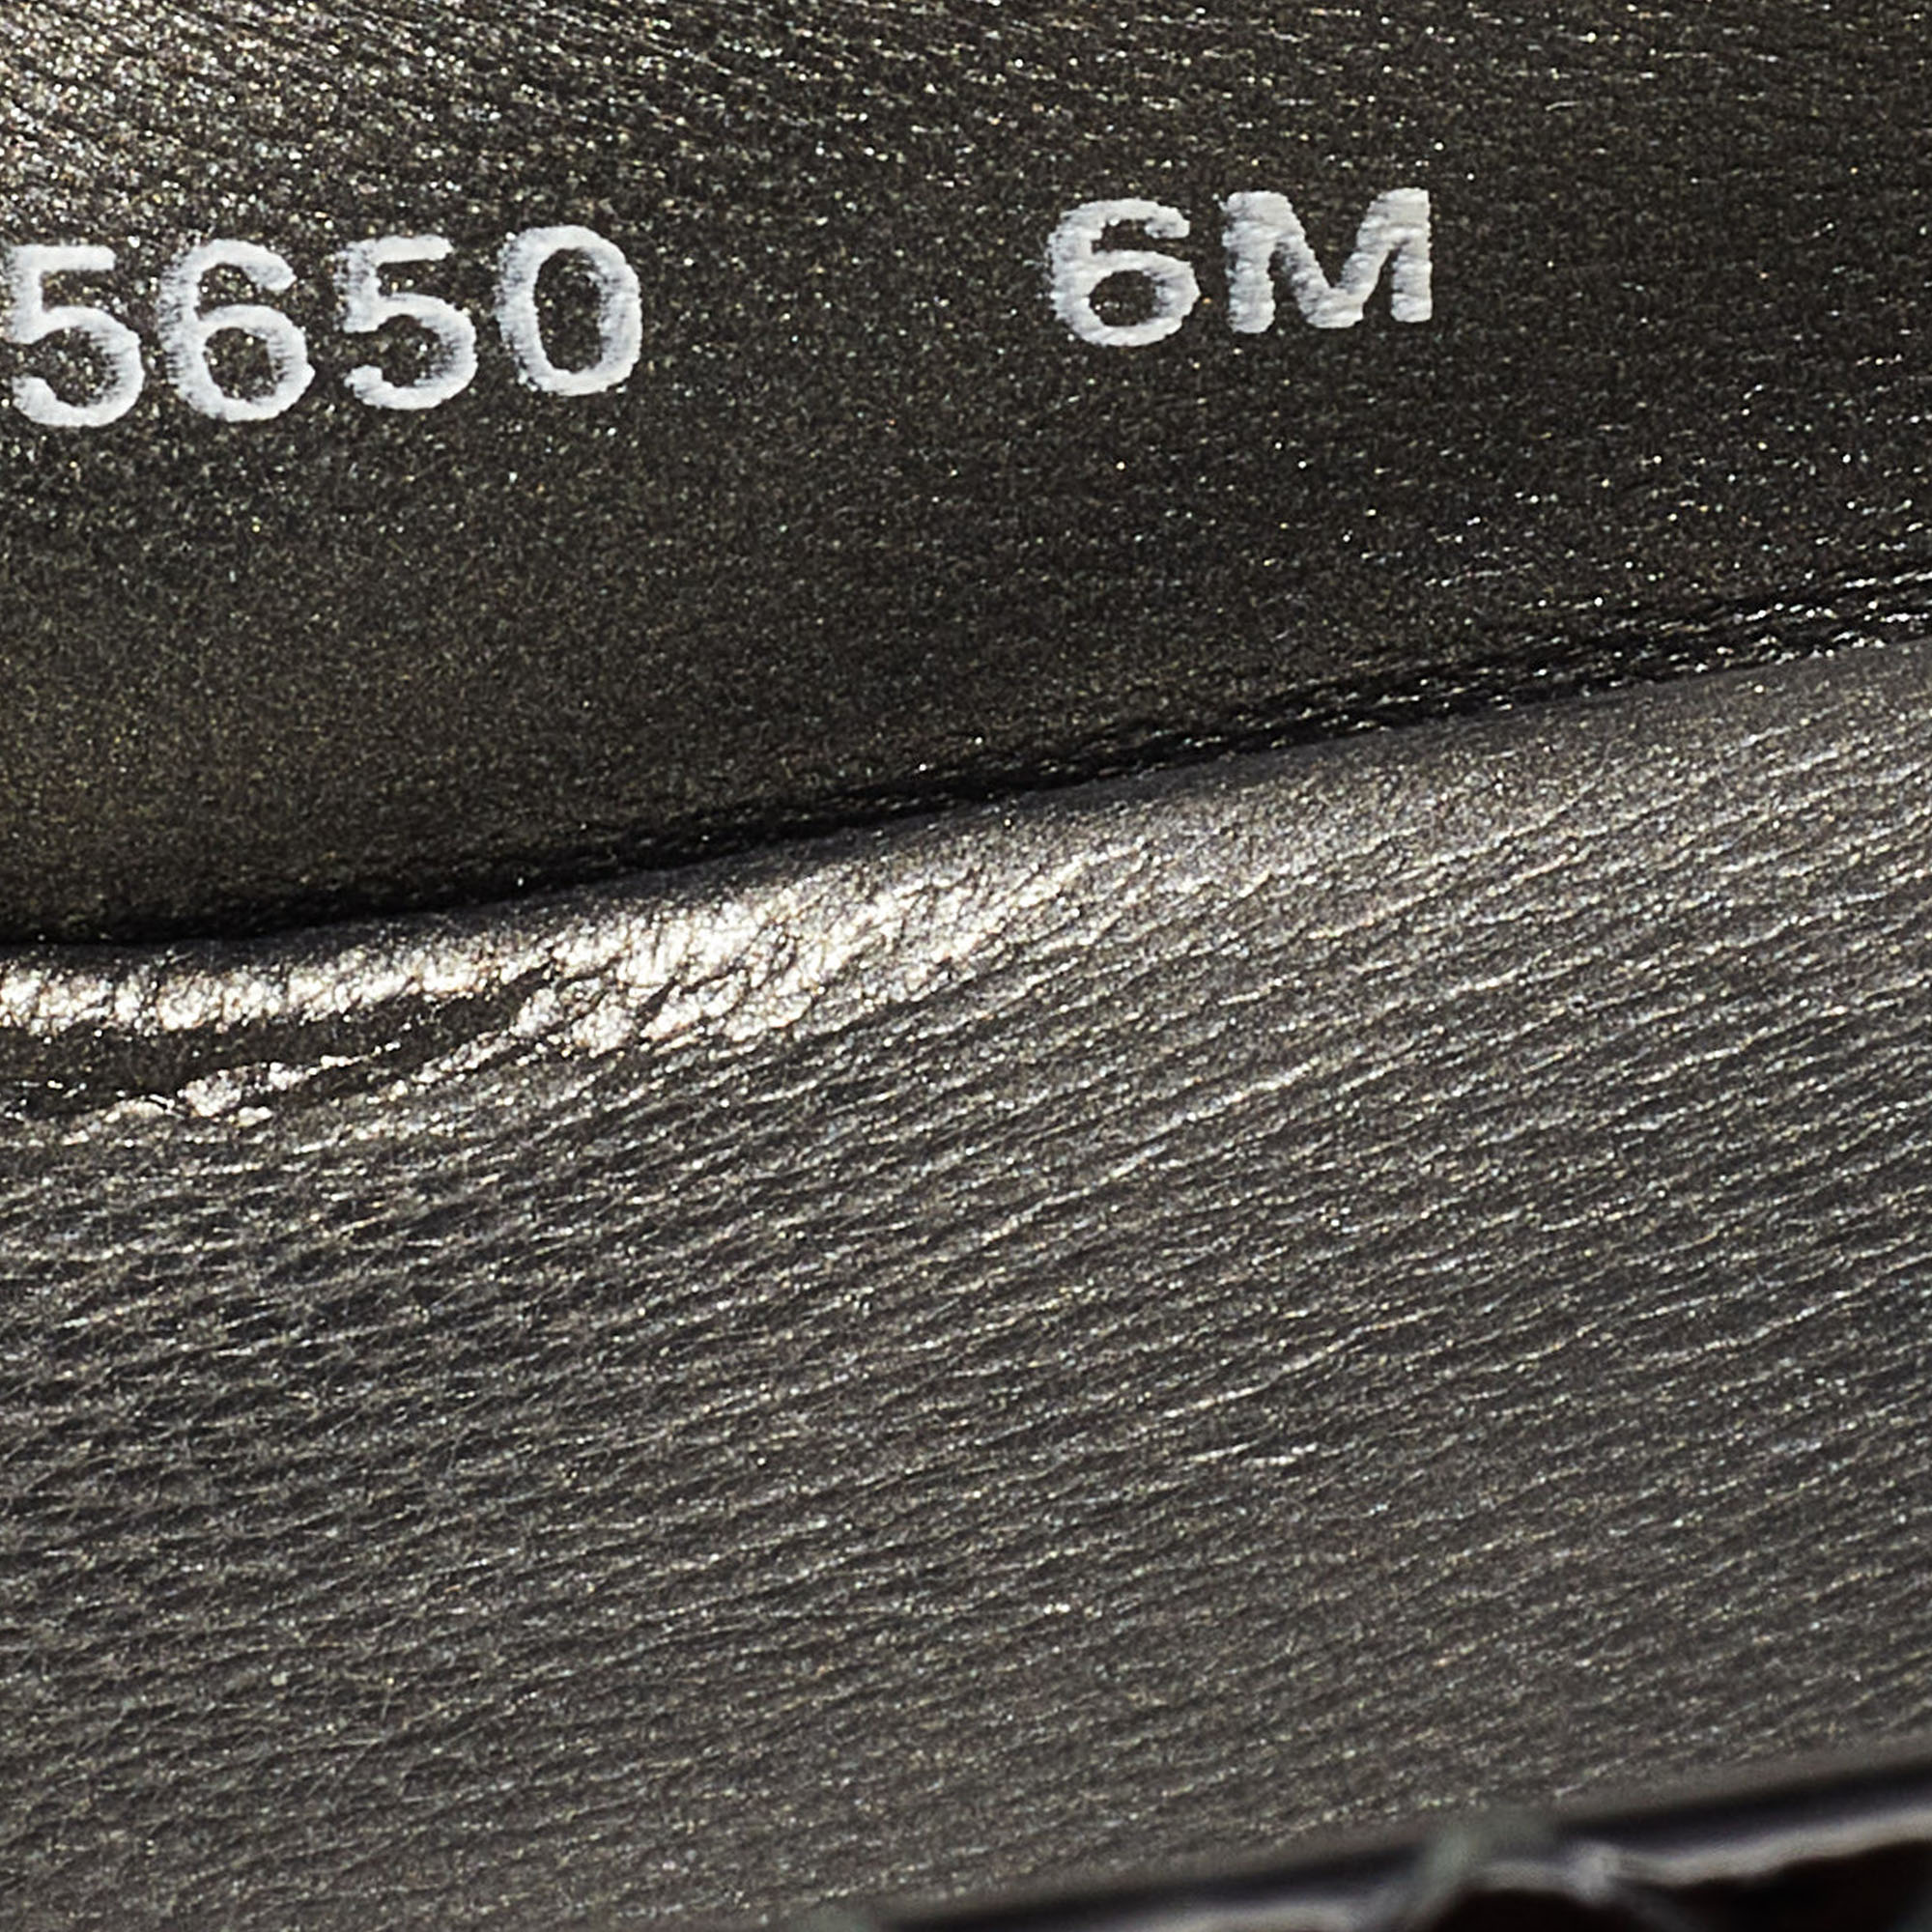 Stuart Weitzman Black Python Embossed Leather Peep Toe Pumps Size 36.5